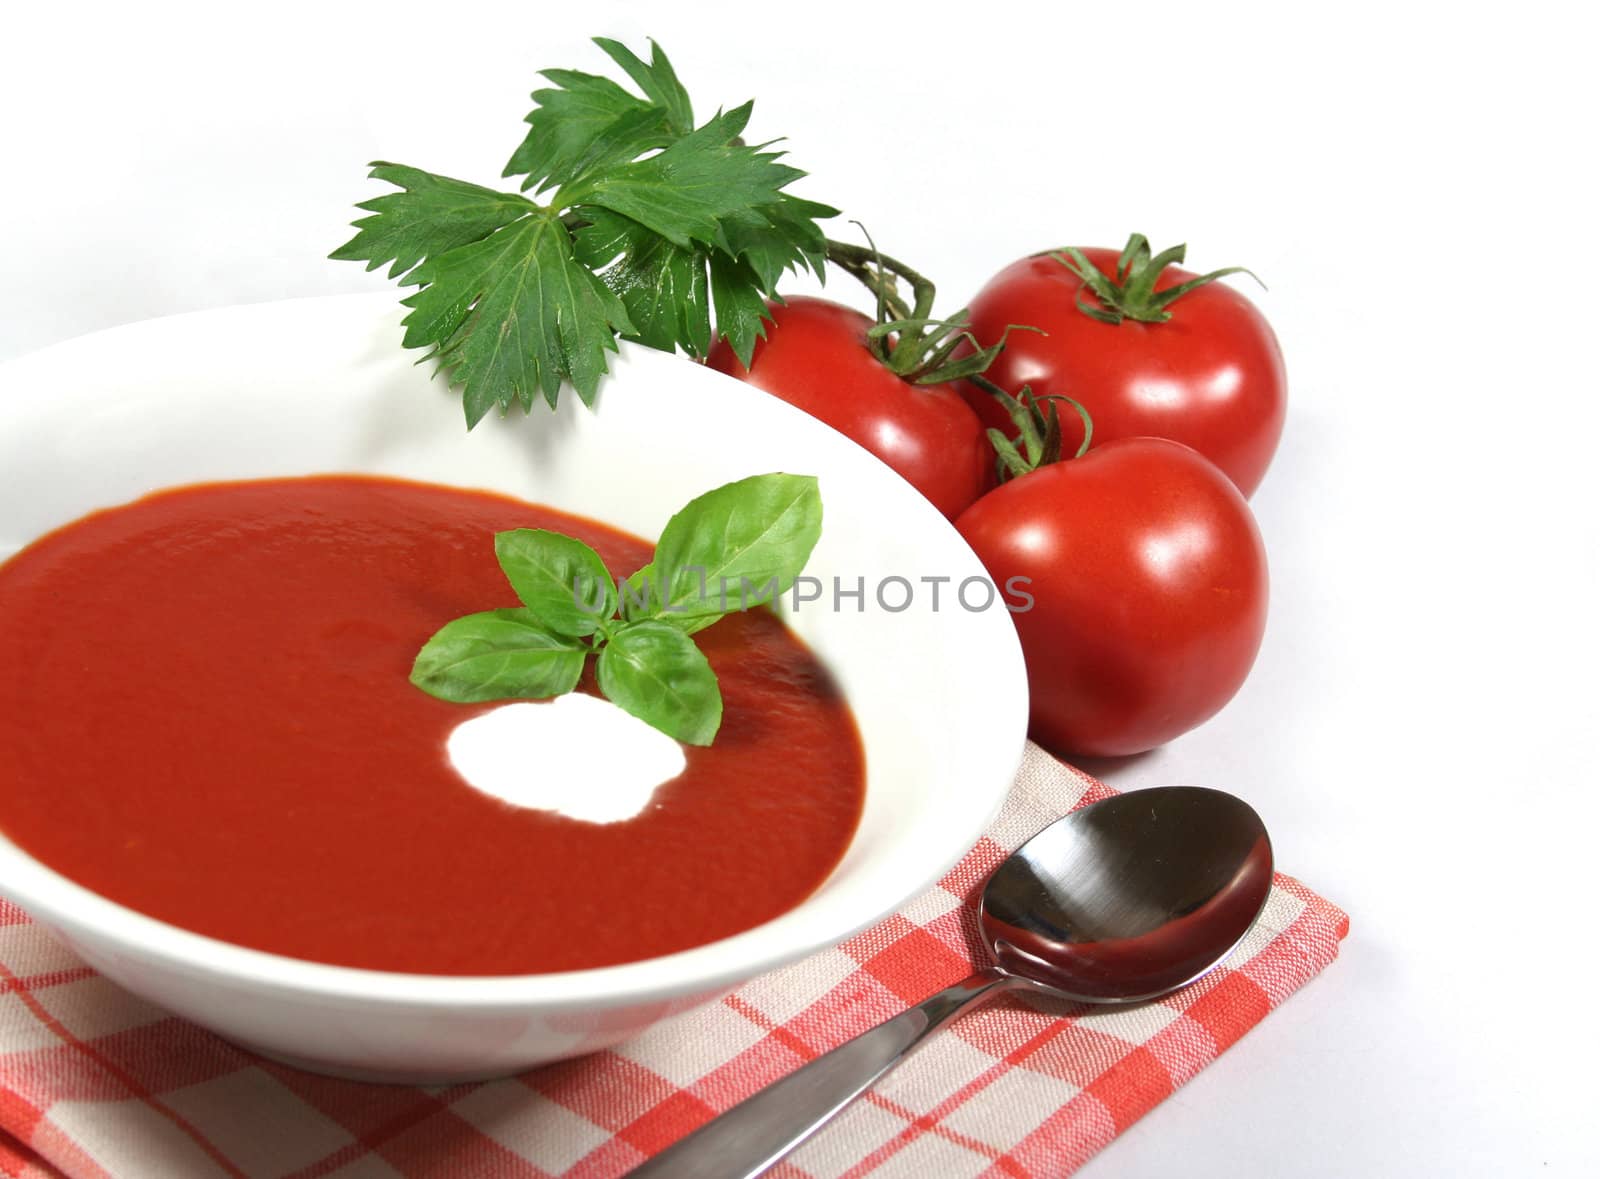 tomato soup by silencefoto